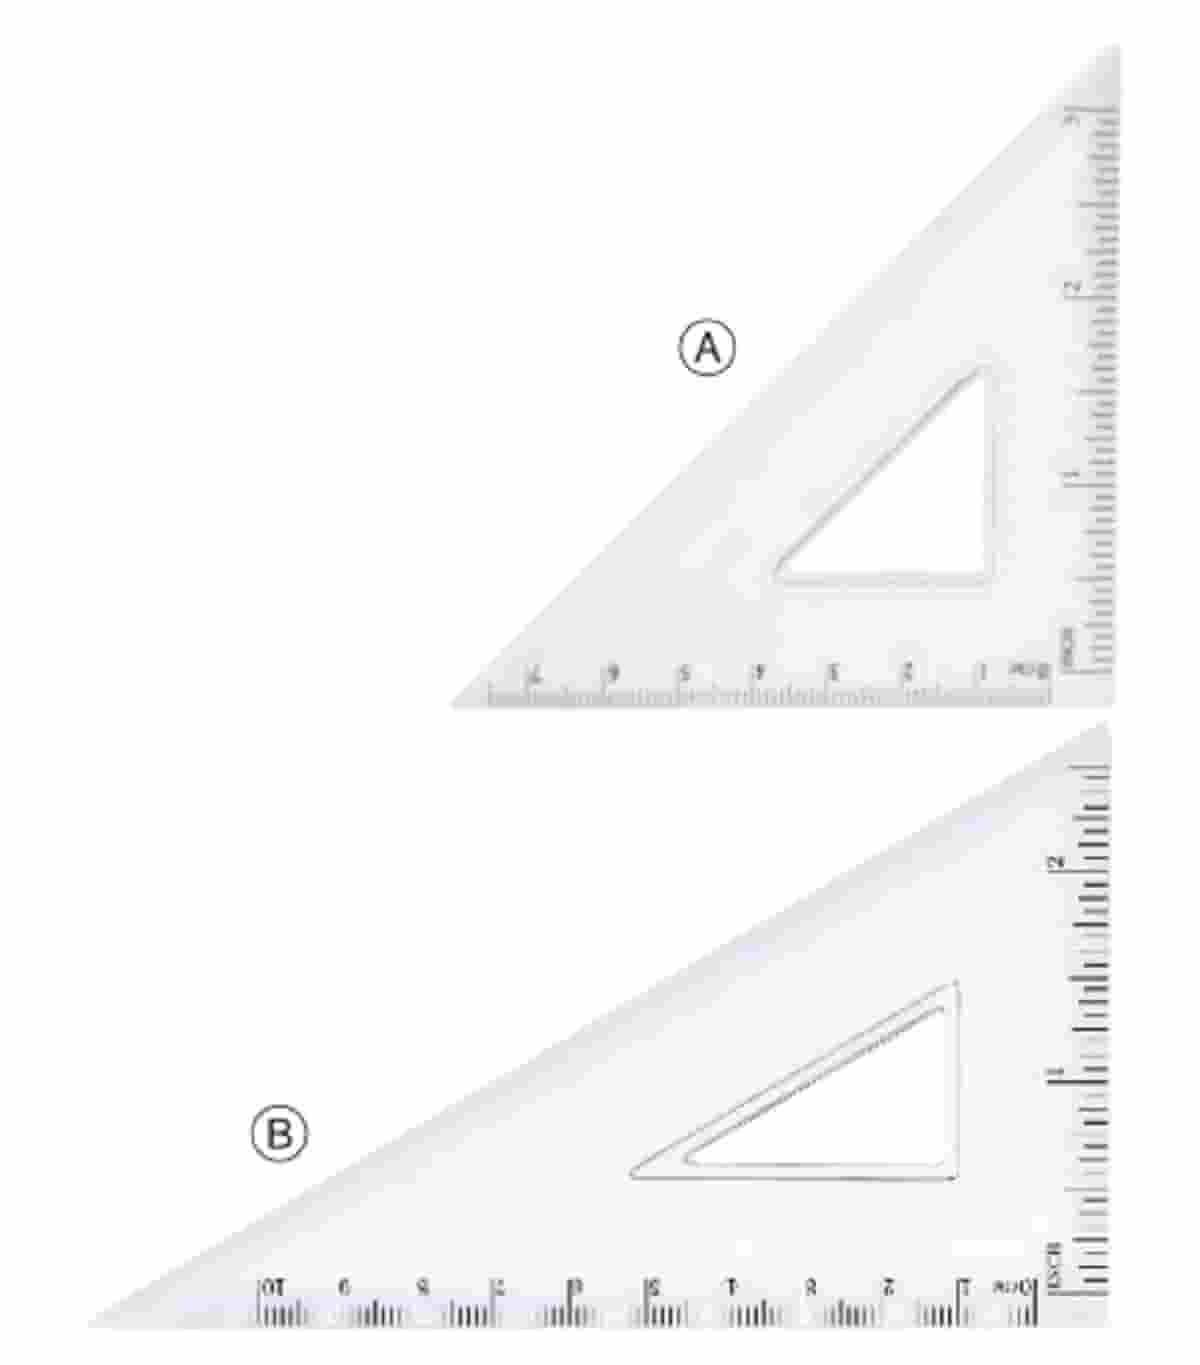 Kunci jawaban Matematika kelas 5 halaman 56 57 Ayo cari jumlah dari dua sudut segitiga selain sudut siku-siku pada gambar di samping